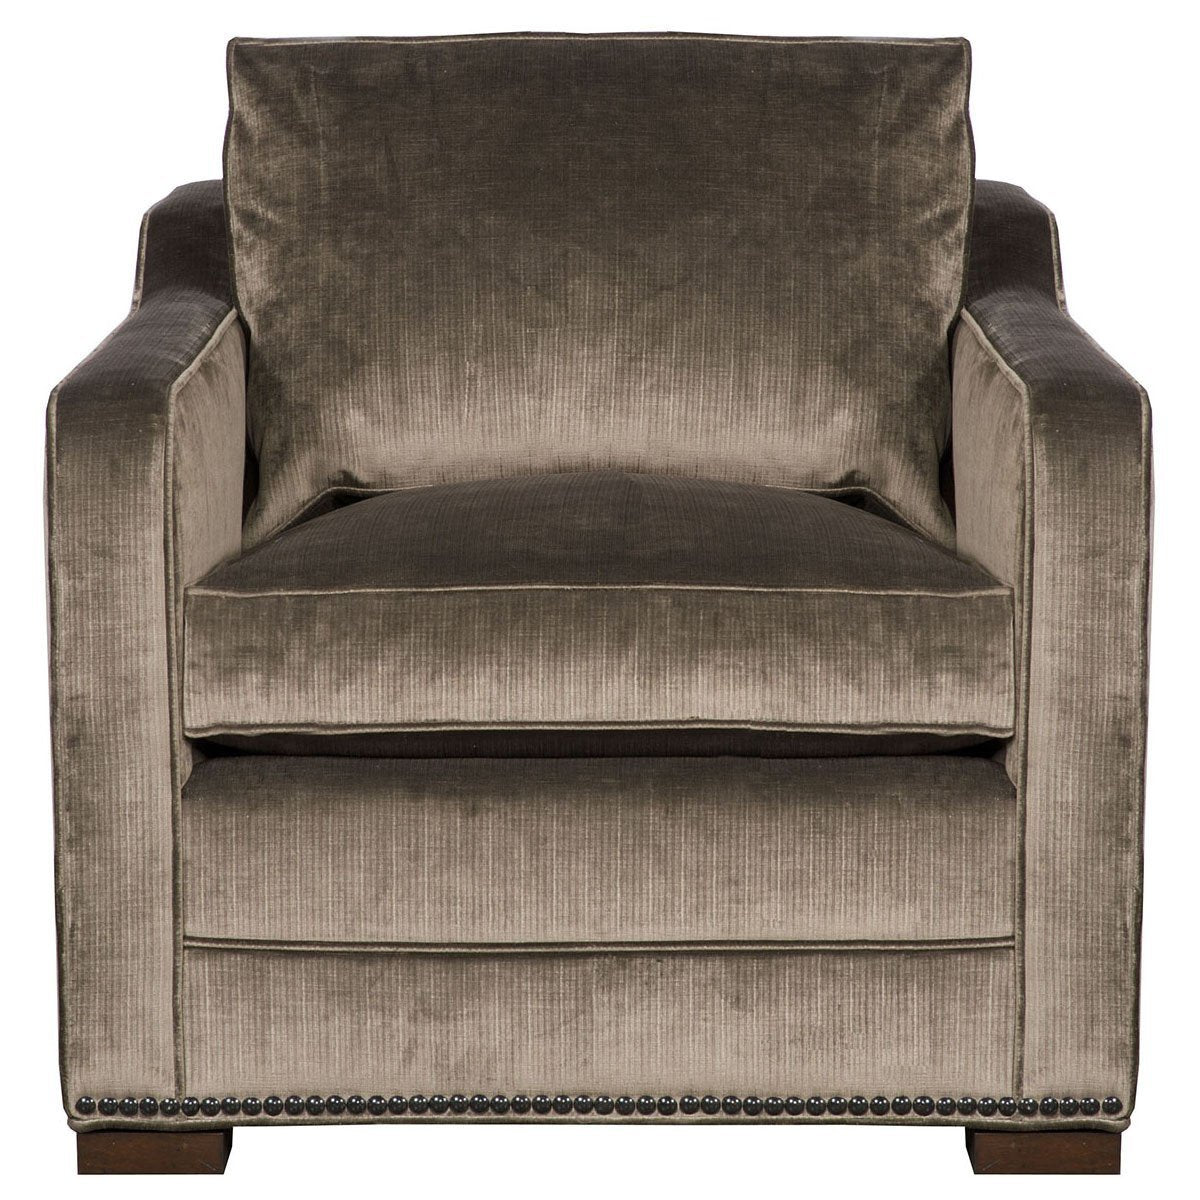 Vanguard Furniture Stanton Chair 647-CH